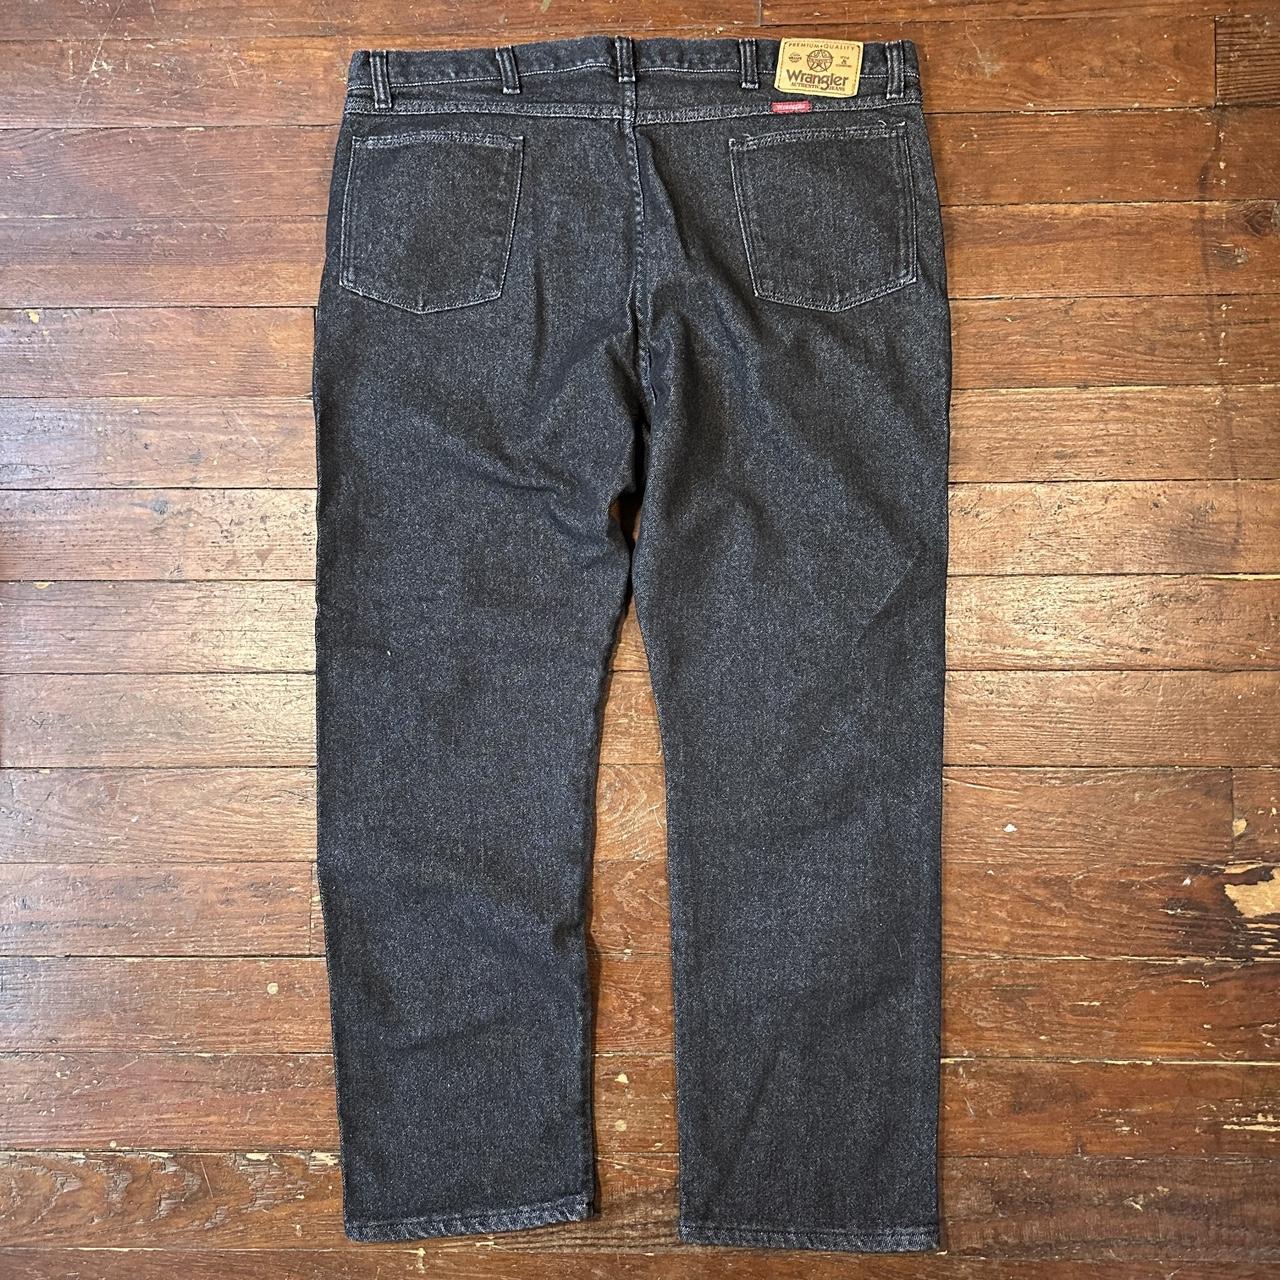 Wrangler stone wash black baggy denim jeans made in...